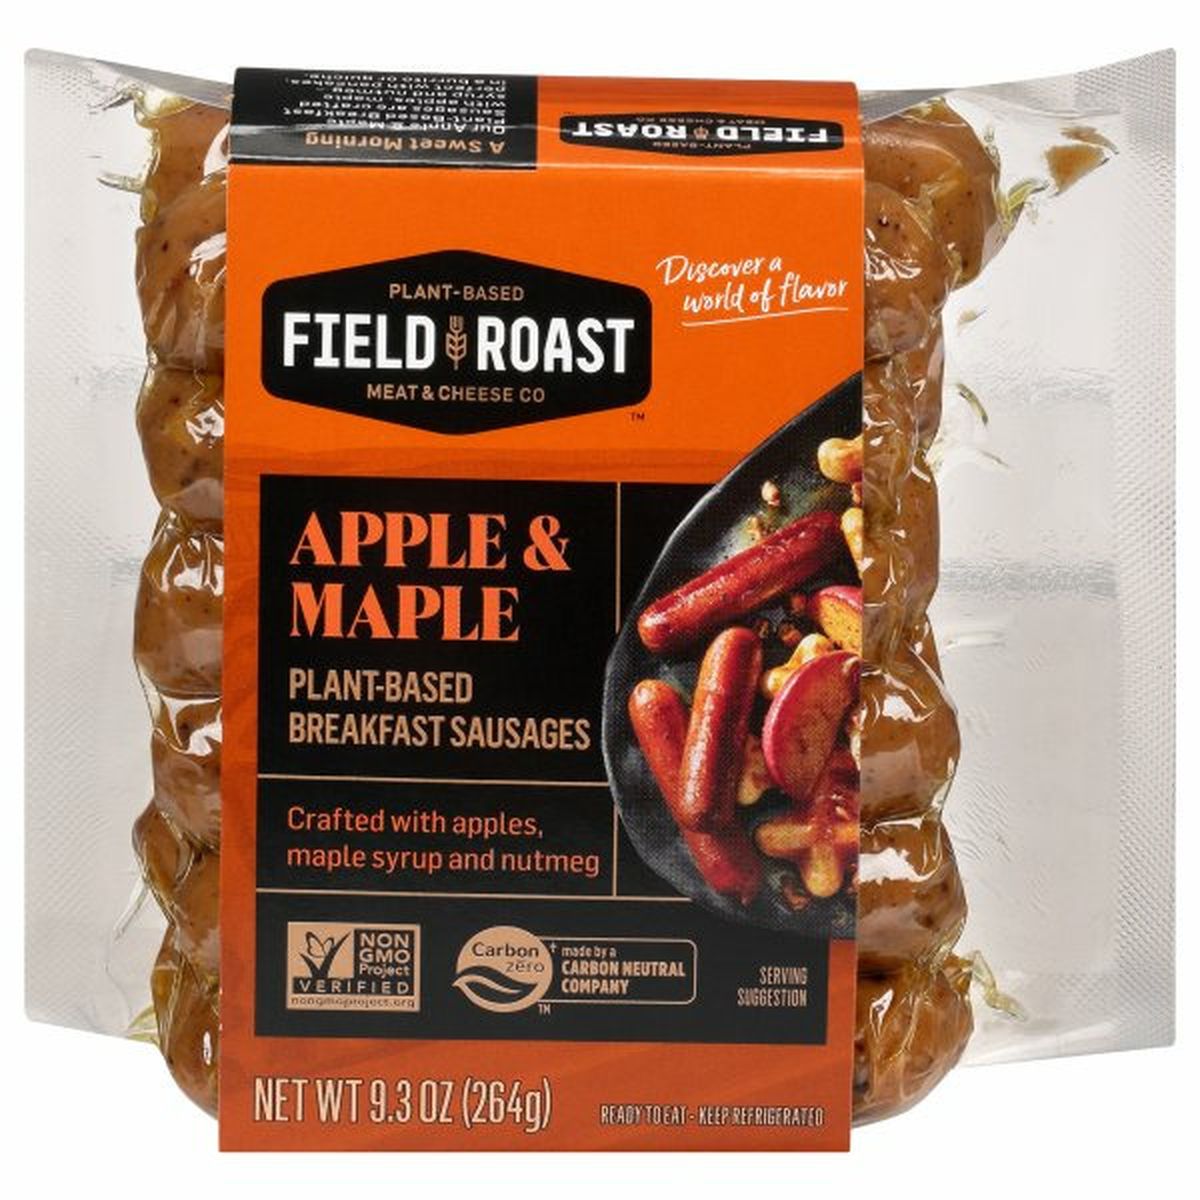 Calories in Field Roast Breakfast Sausage, Apple & Maple, Plant-Based